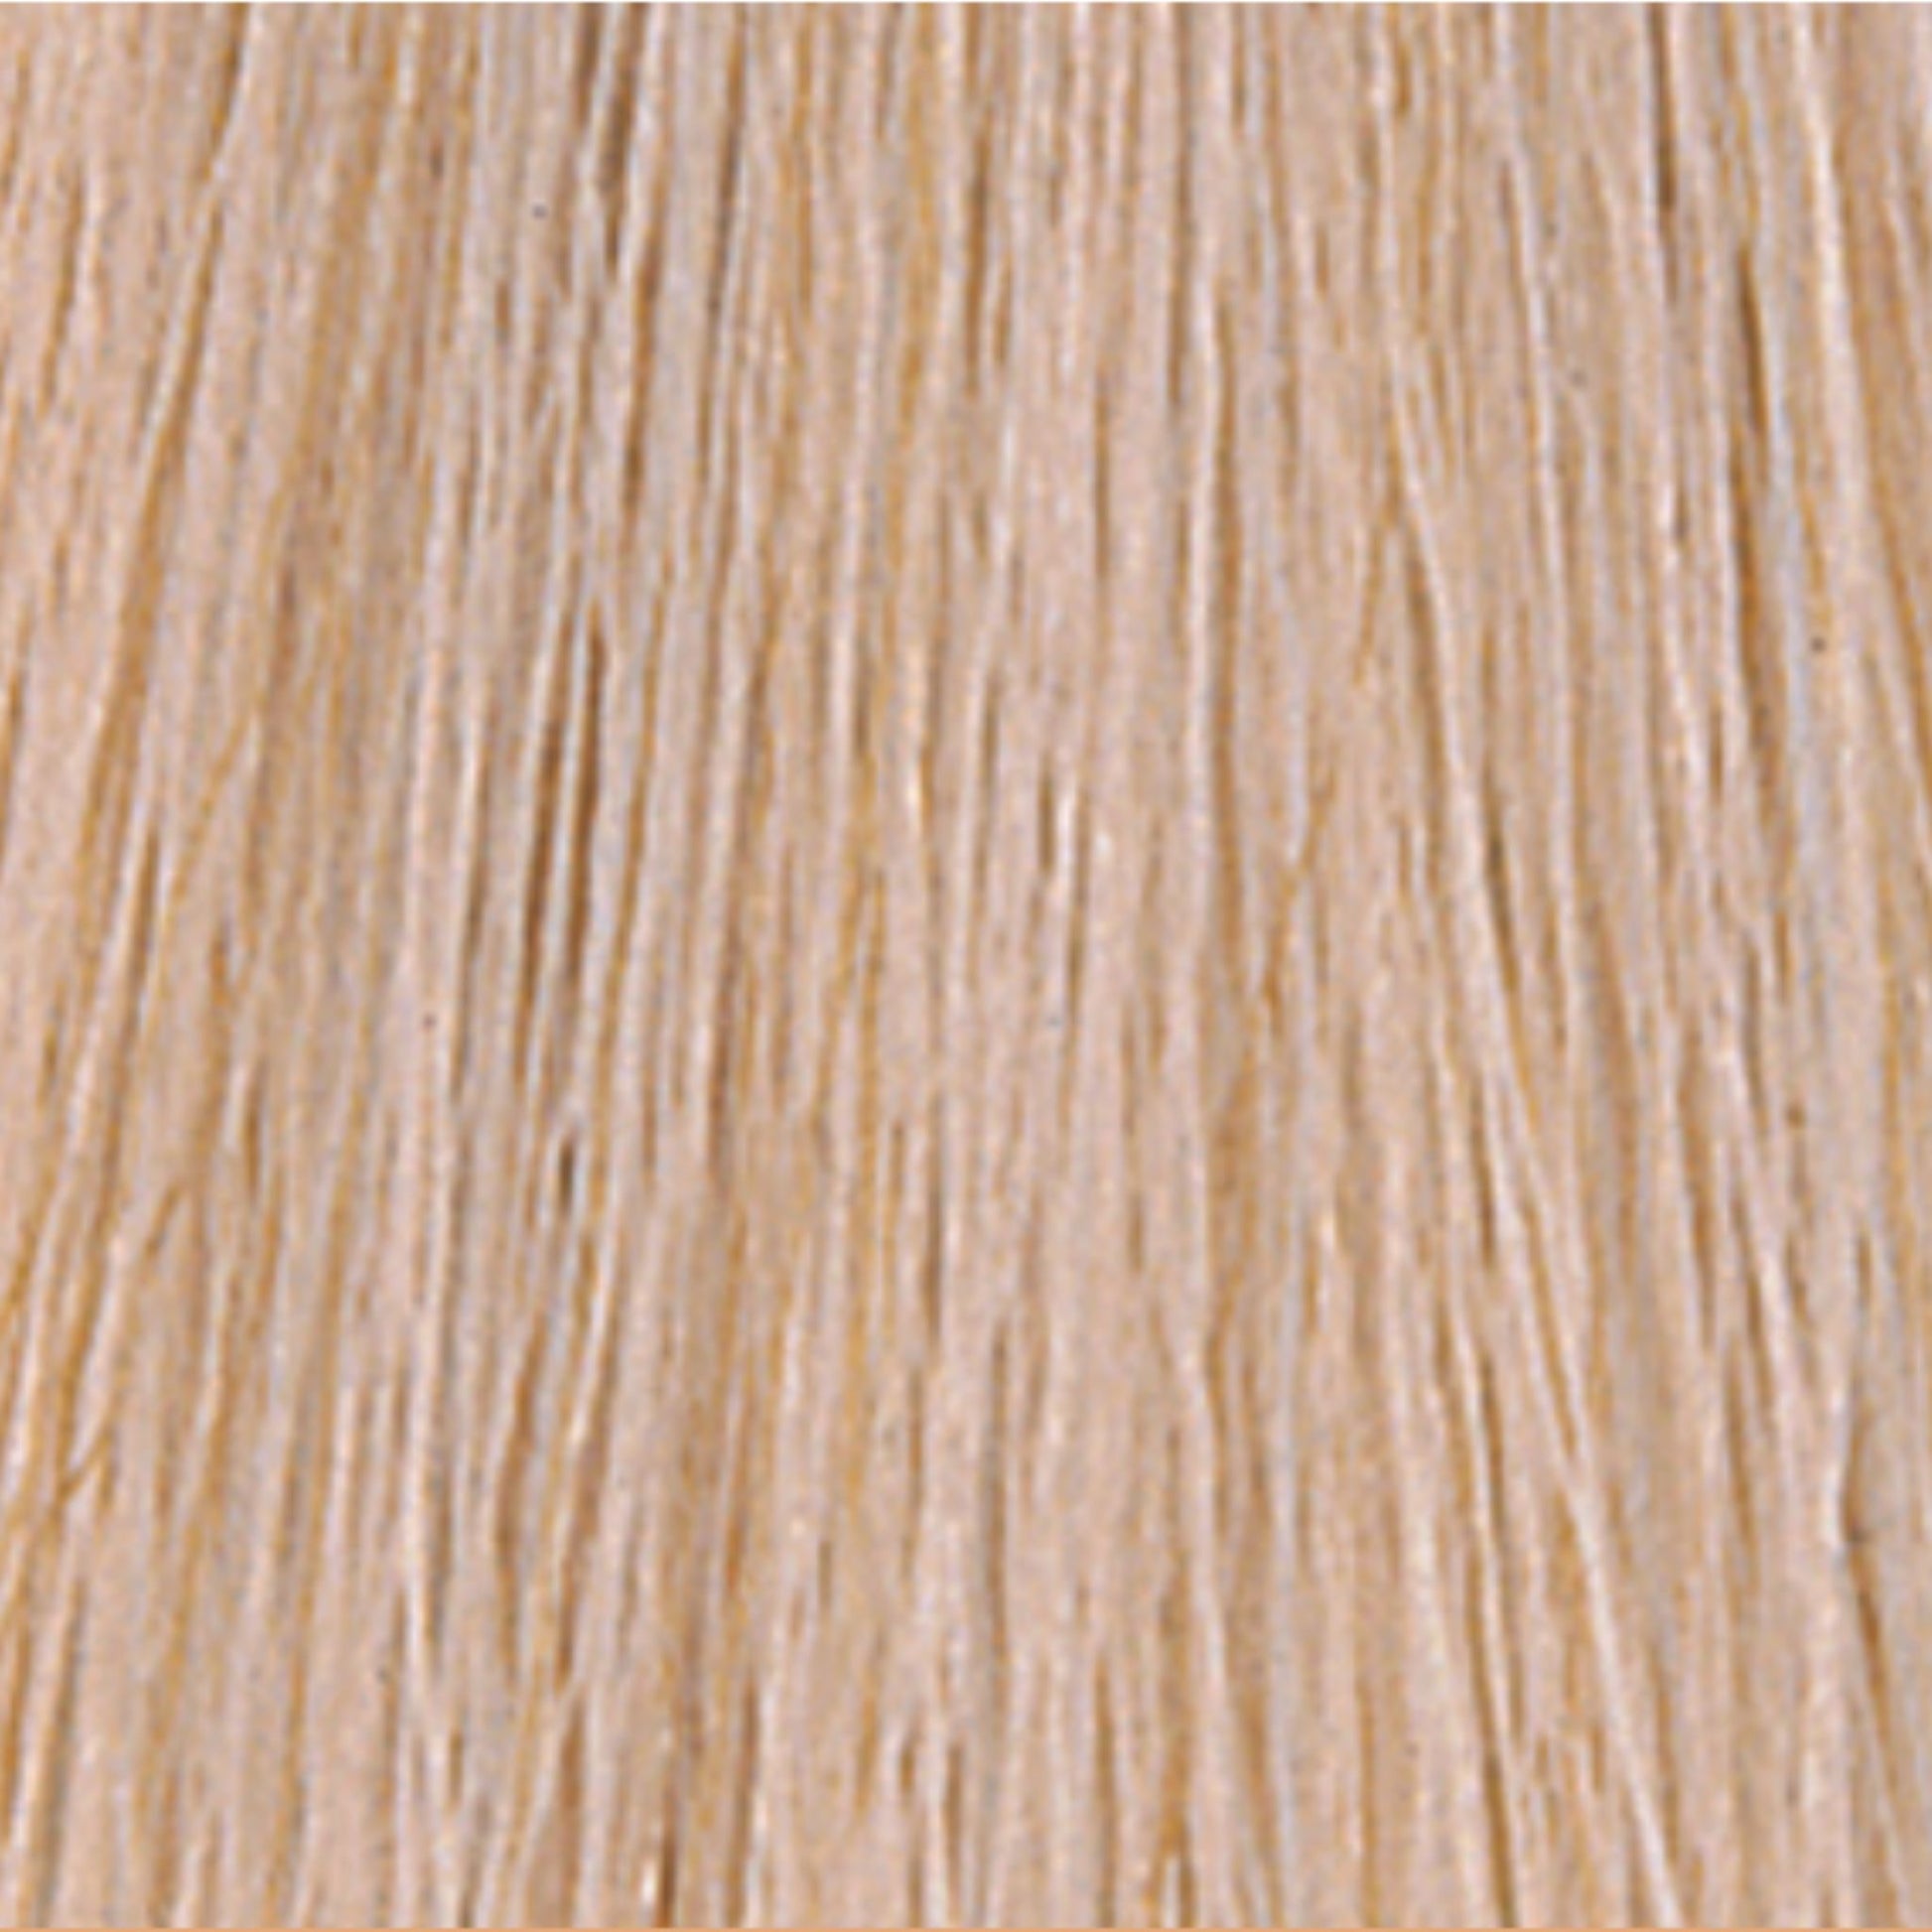 Wella Colour Charm T11 Lightest Beige Blonde Toner Swatch Australia